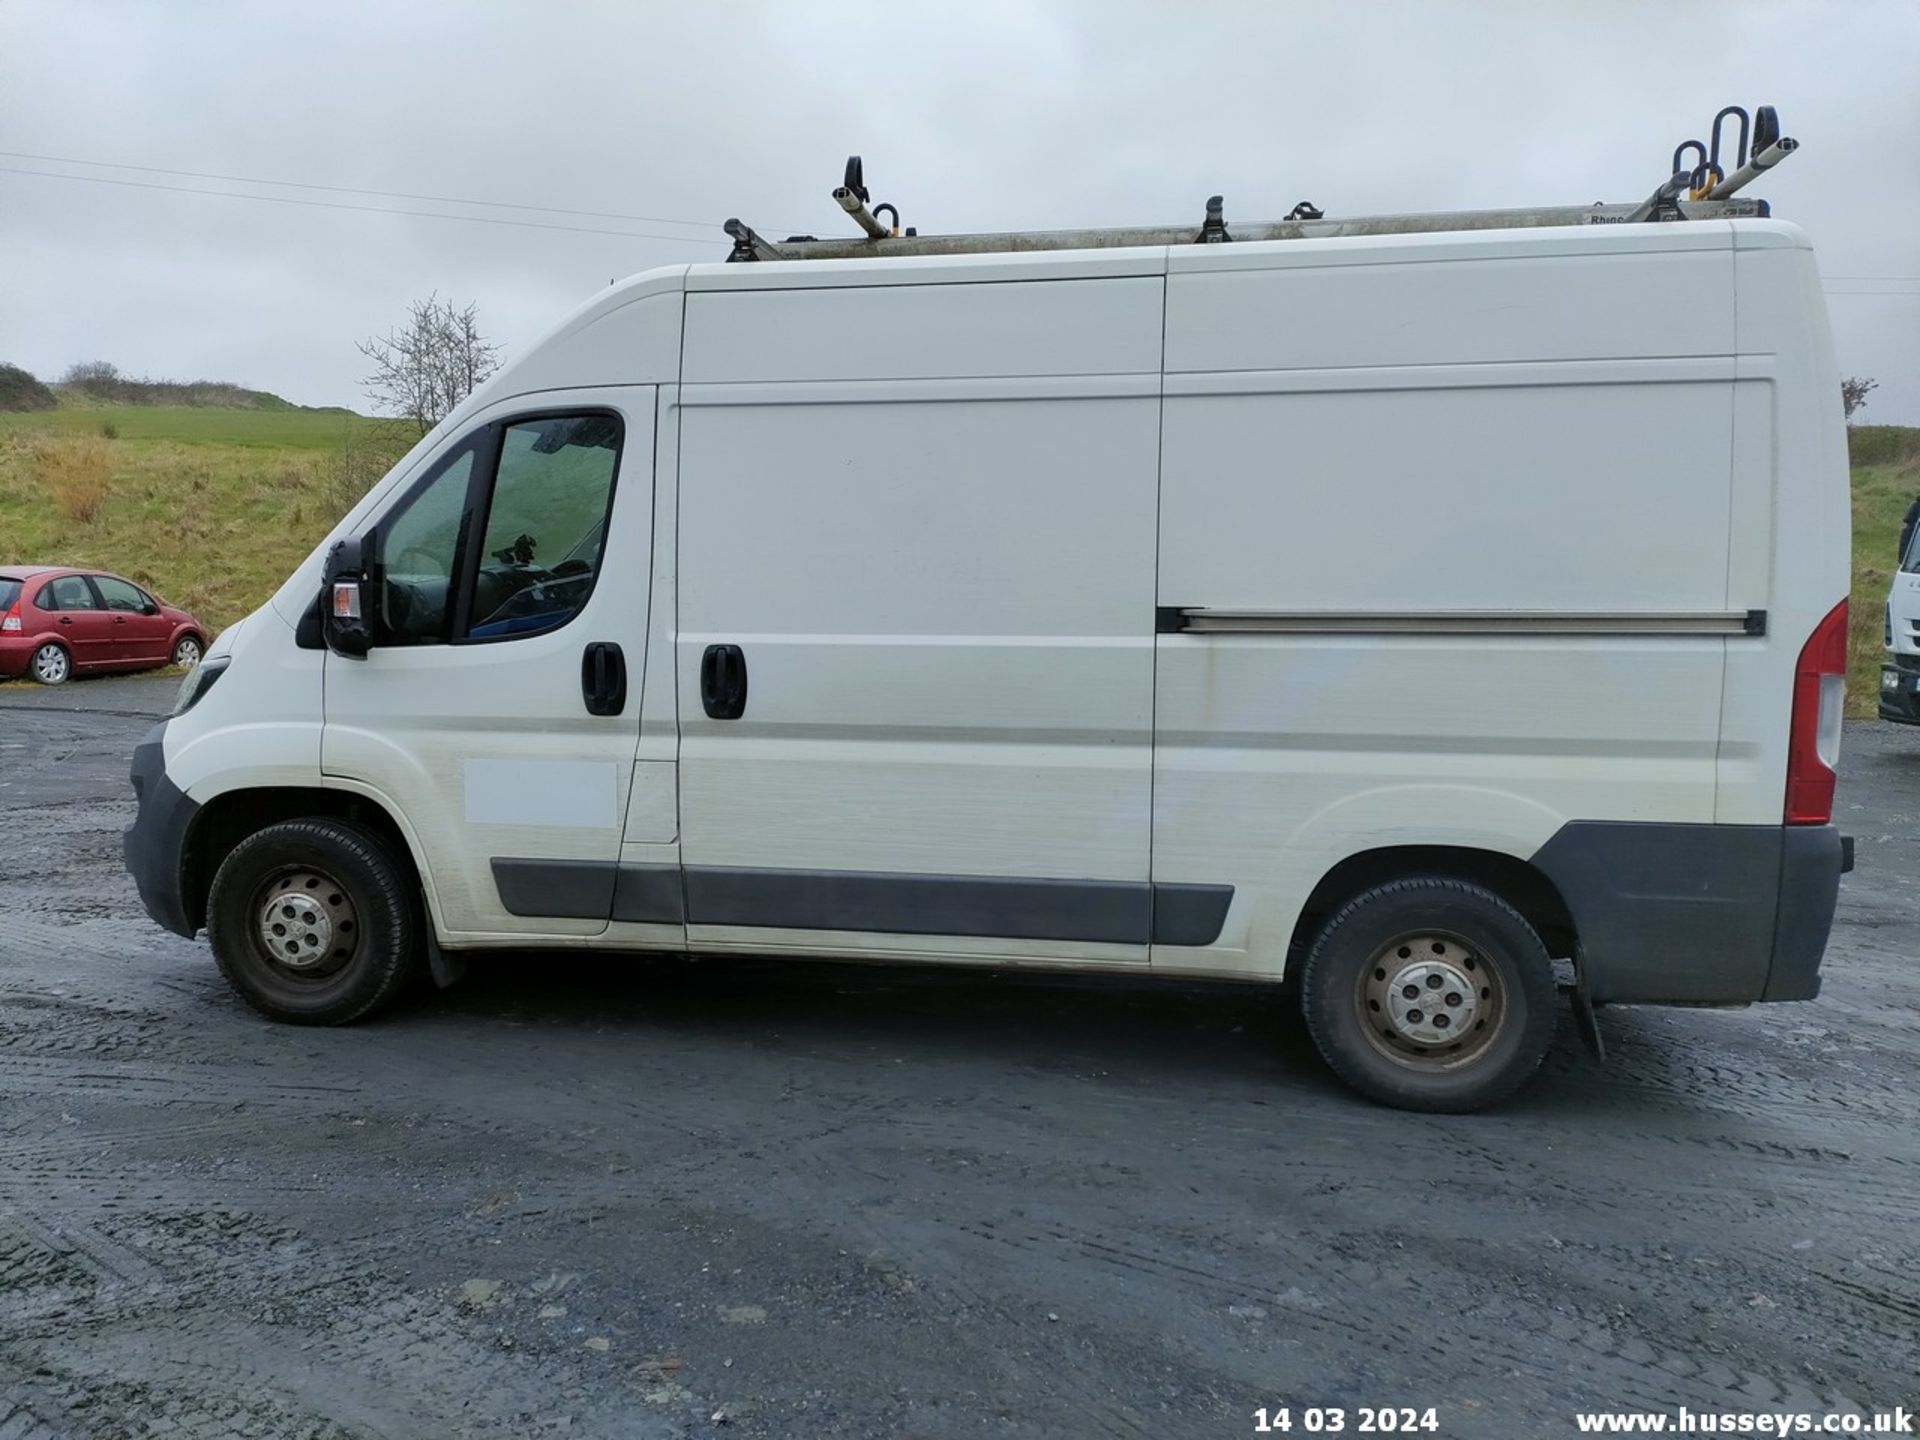 16/16 PEUGEOT BOXER 335 L2H2 HDI - 2198cc 5dr Van (White, 131k) - Image 21 of 62